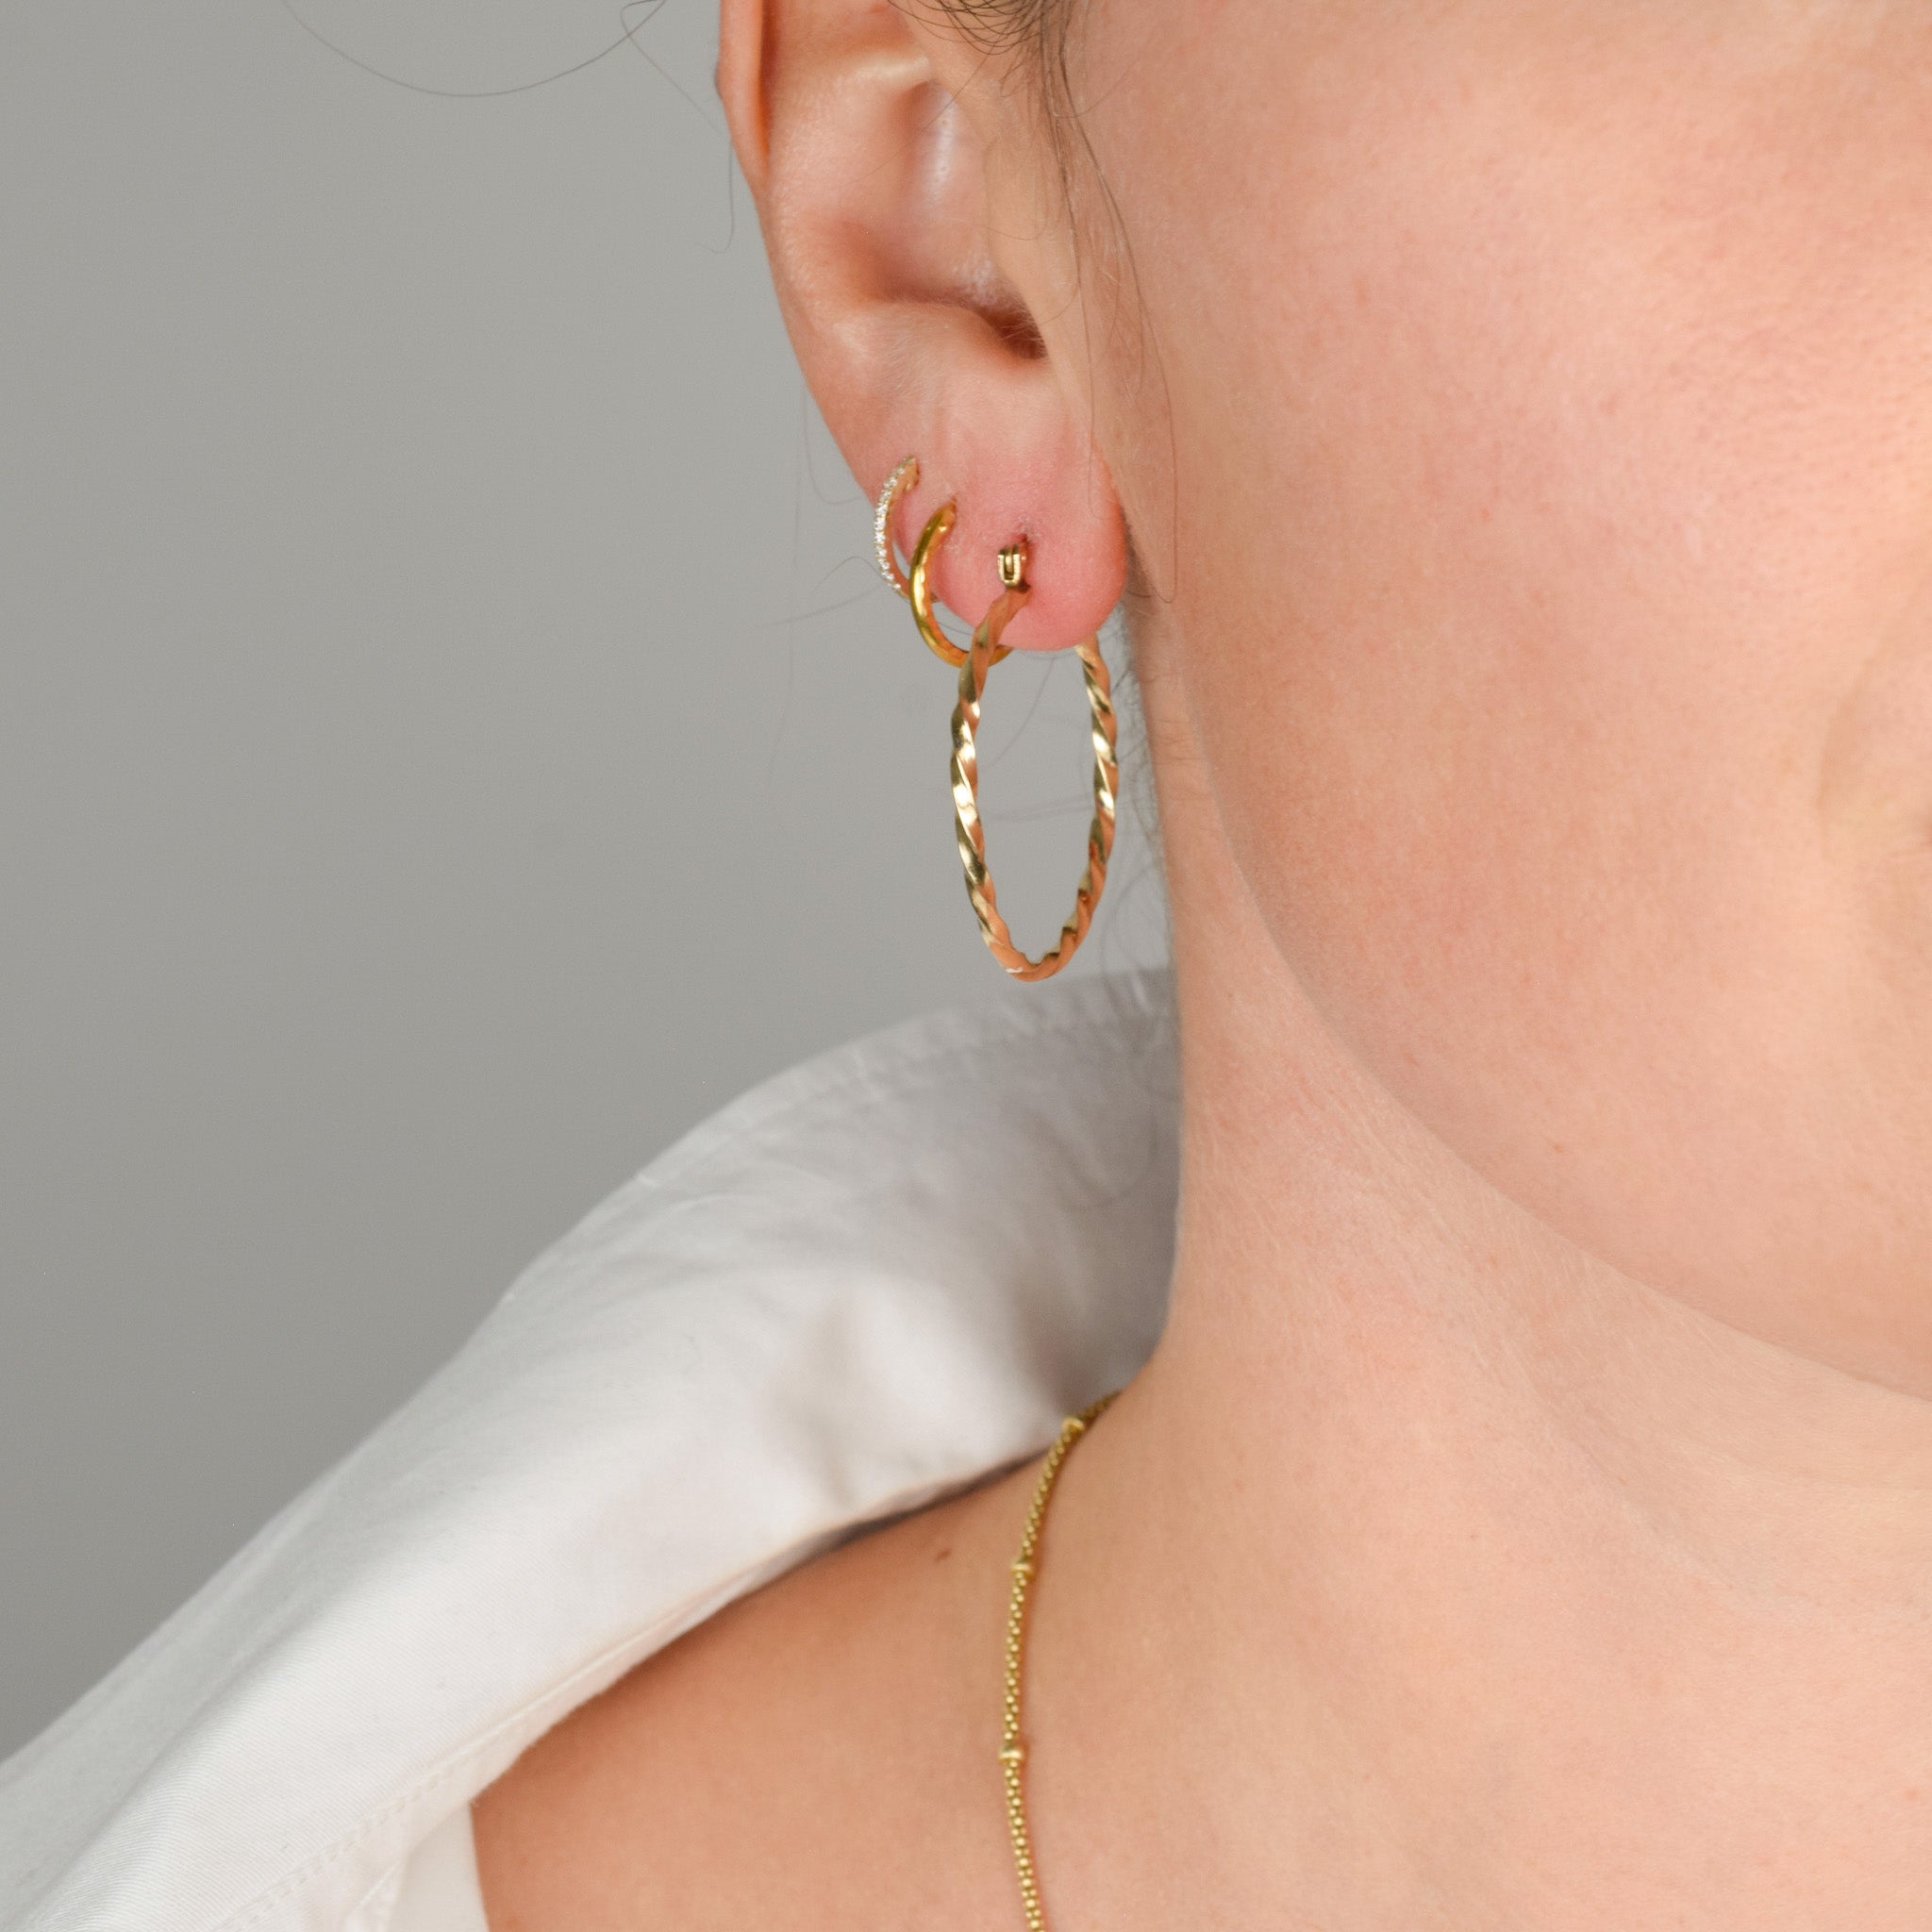 10k yellow gold hoop earrings, folklor vintage jewelry canada